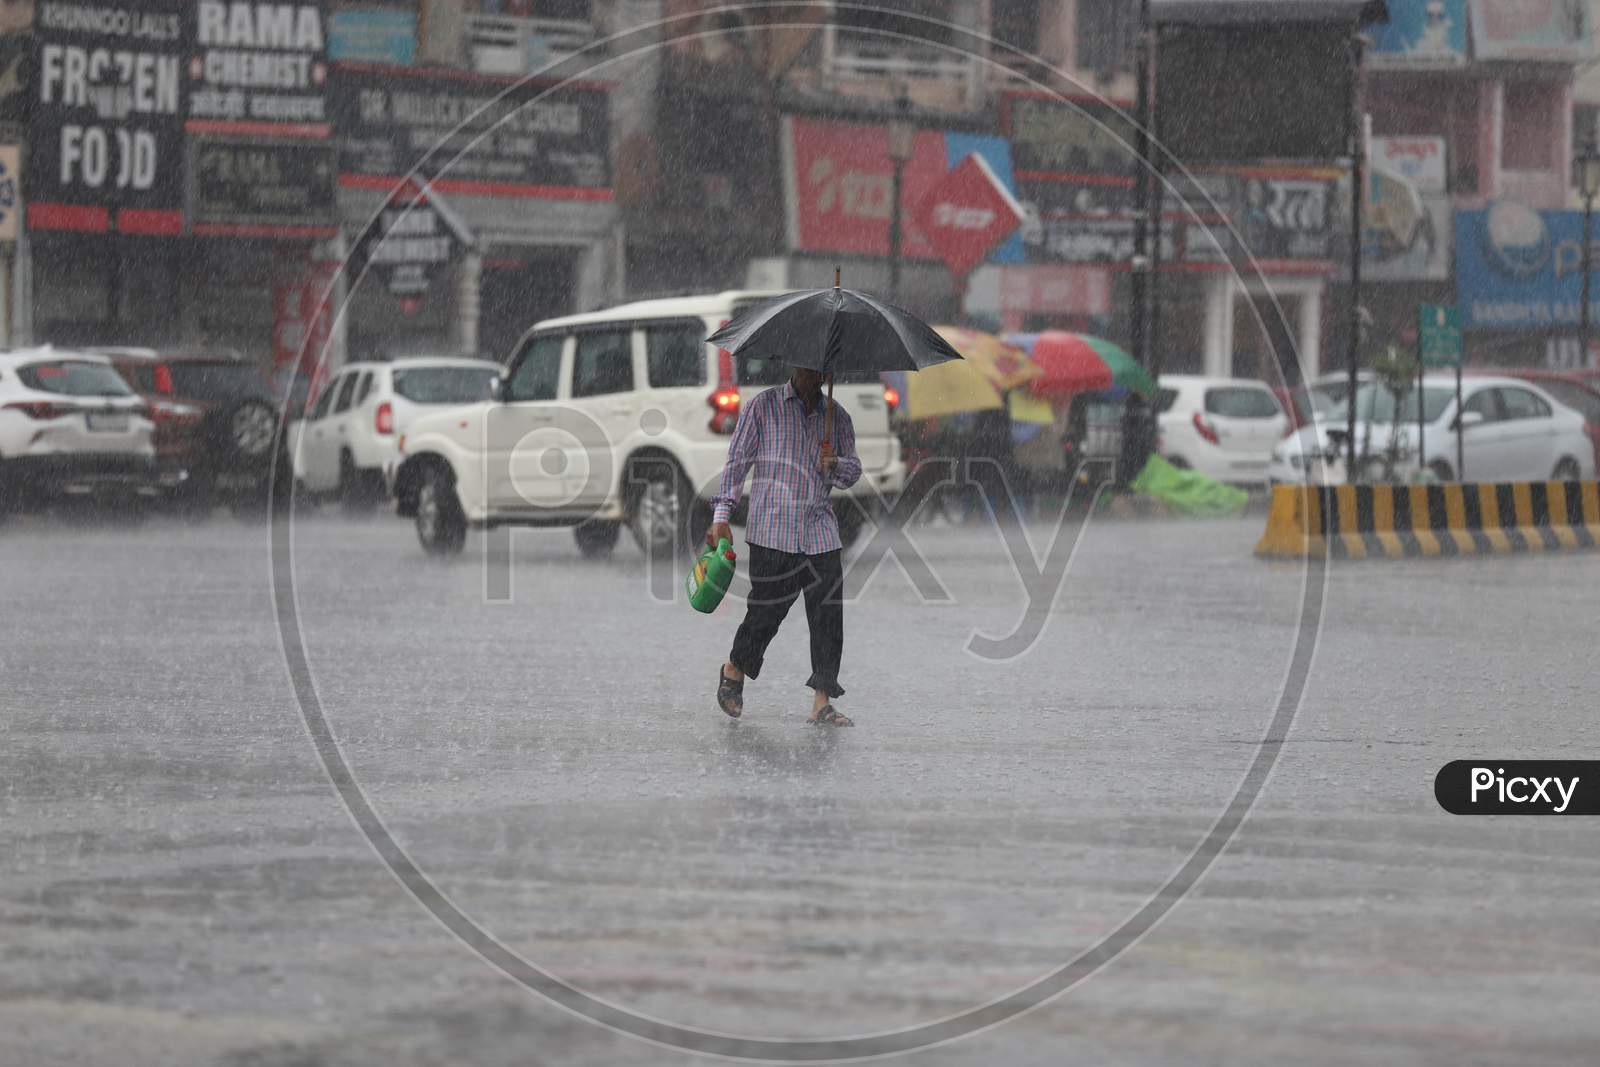 A Man Hold Umbrella as he Walks On The Road During Heavy Monsoon Rain In Prayagraj, June 25, 2020.